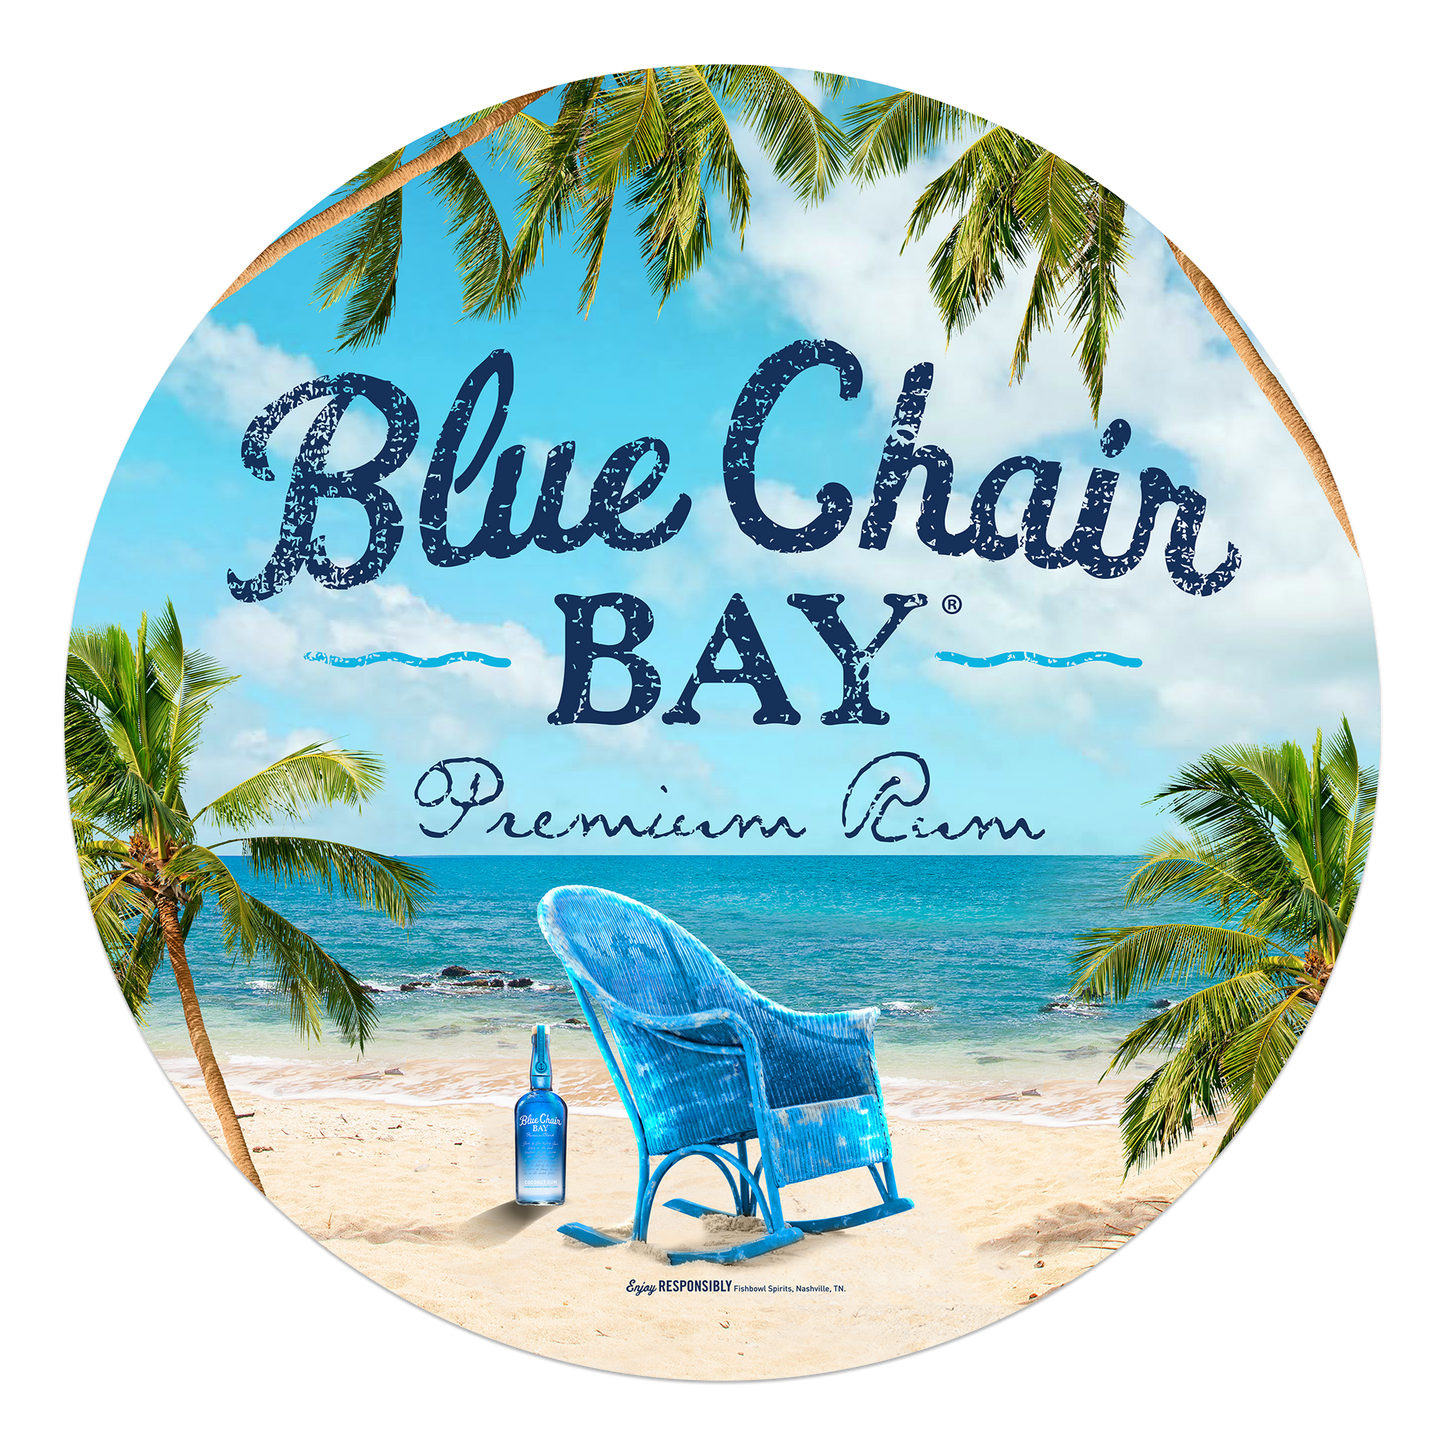 Blue Chair Bay Rum Sticker / decal